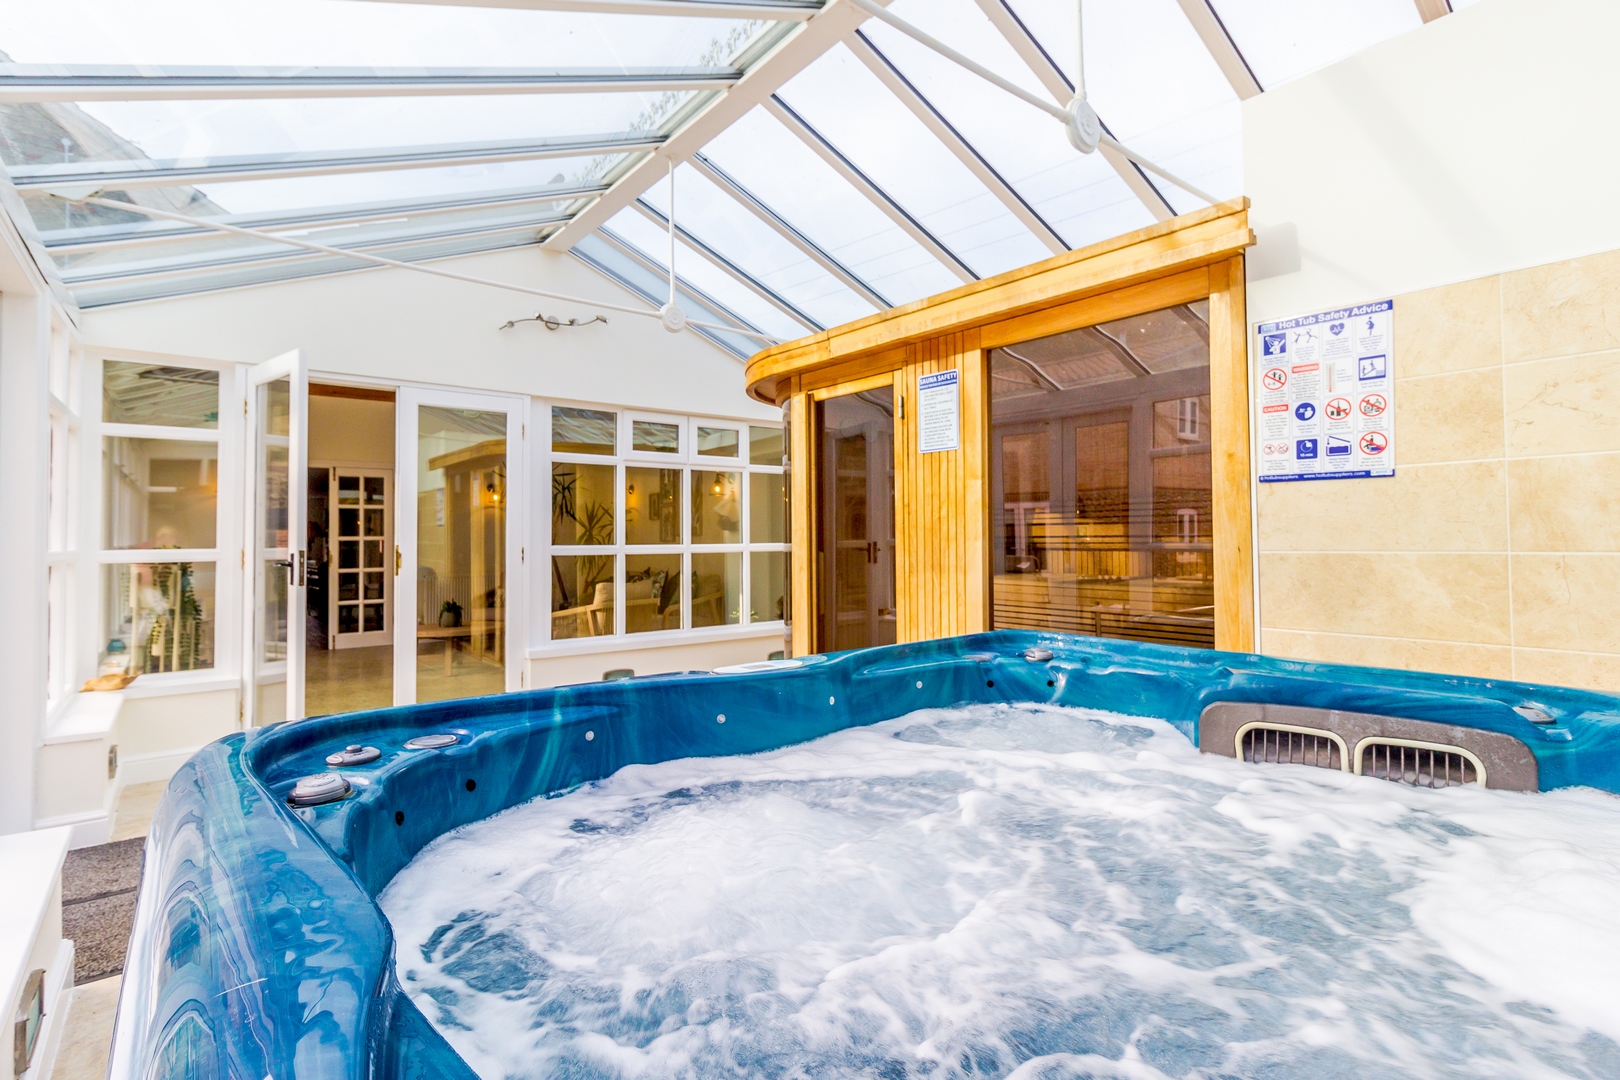 Scotgate Cottage - luxury hot tub and sauna